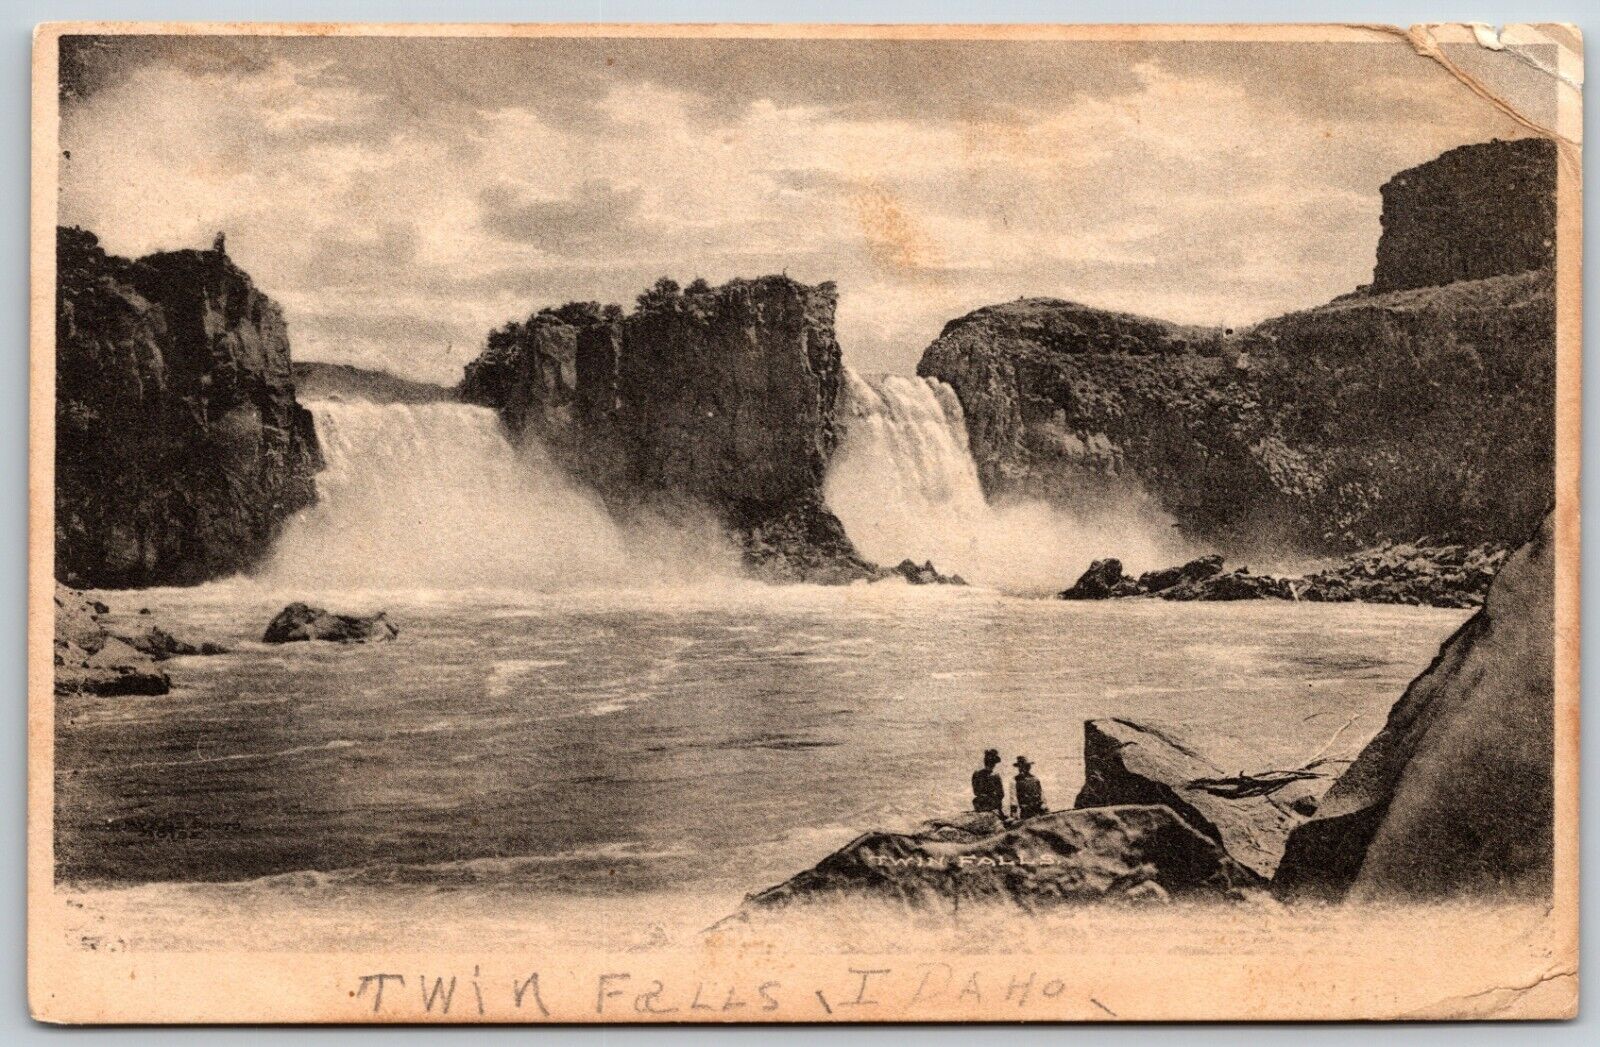 Twin Falls, Idaho  - Postcard